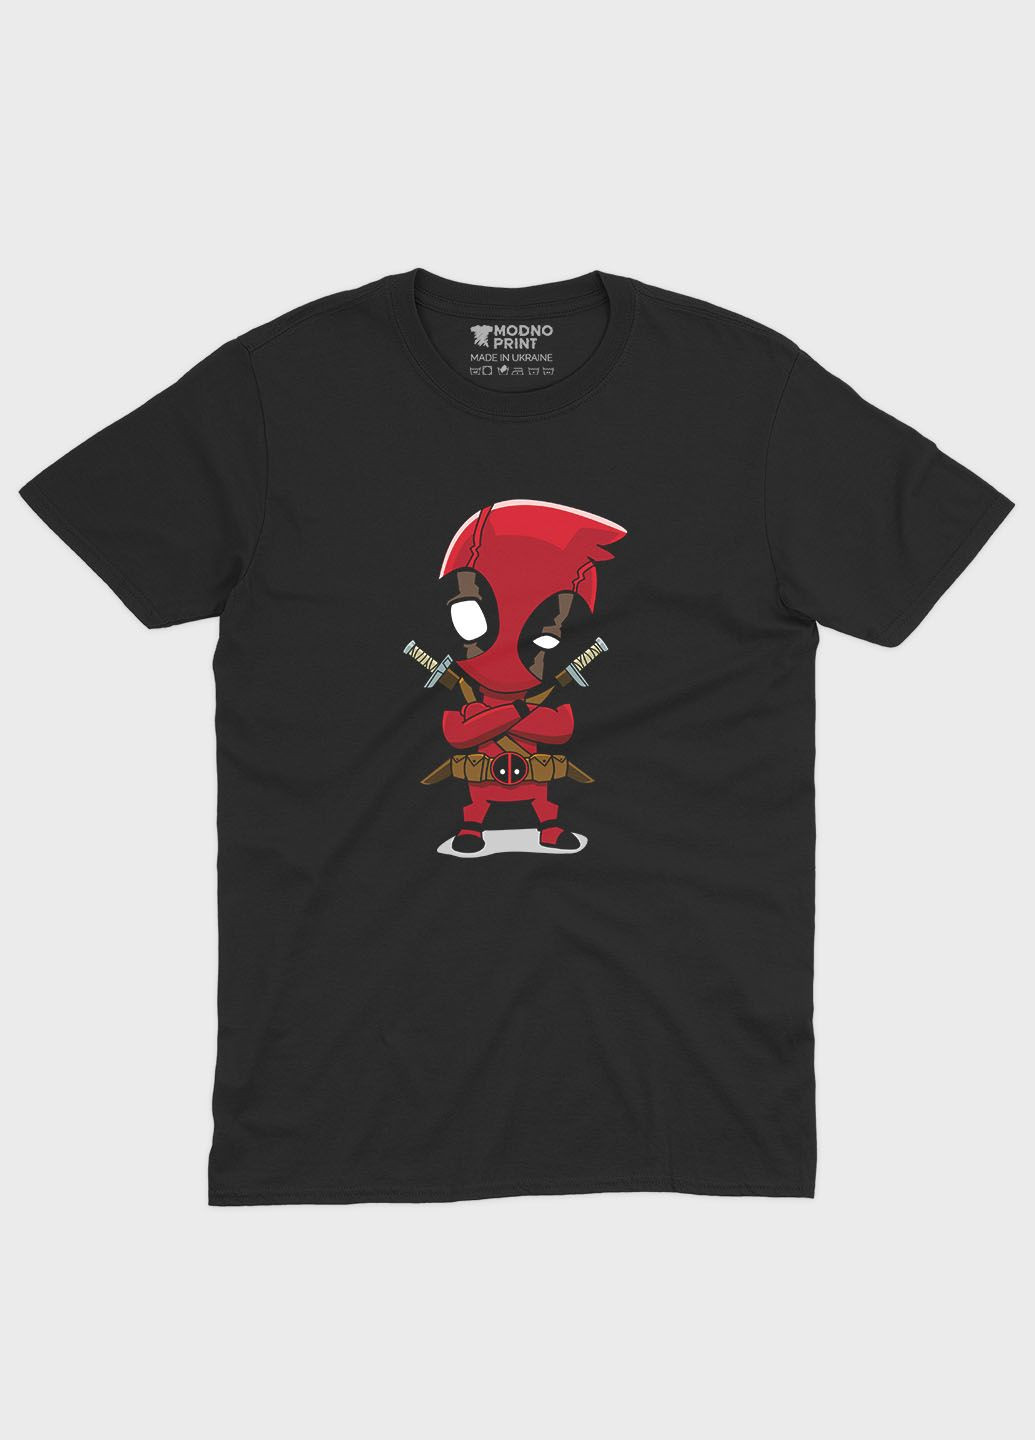 Черная демисезонная футболка для мальчика с принтом антигероя - дедпул (ts001-1-bl-006-015-012-b) Modno